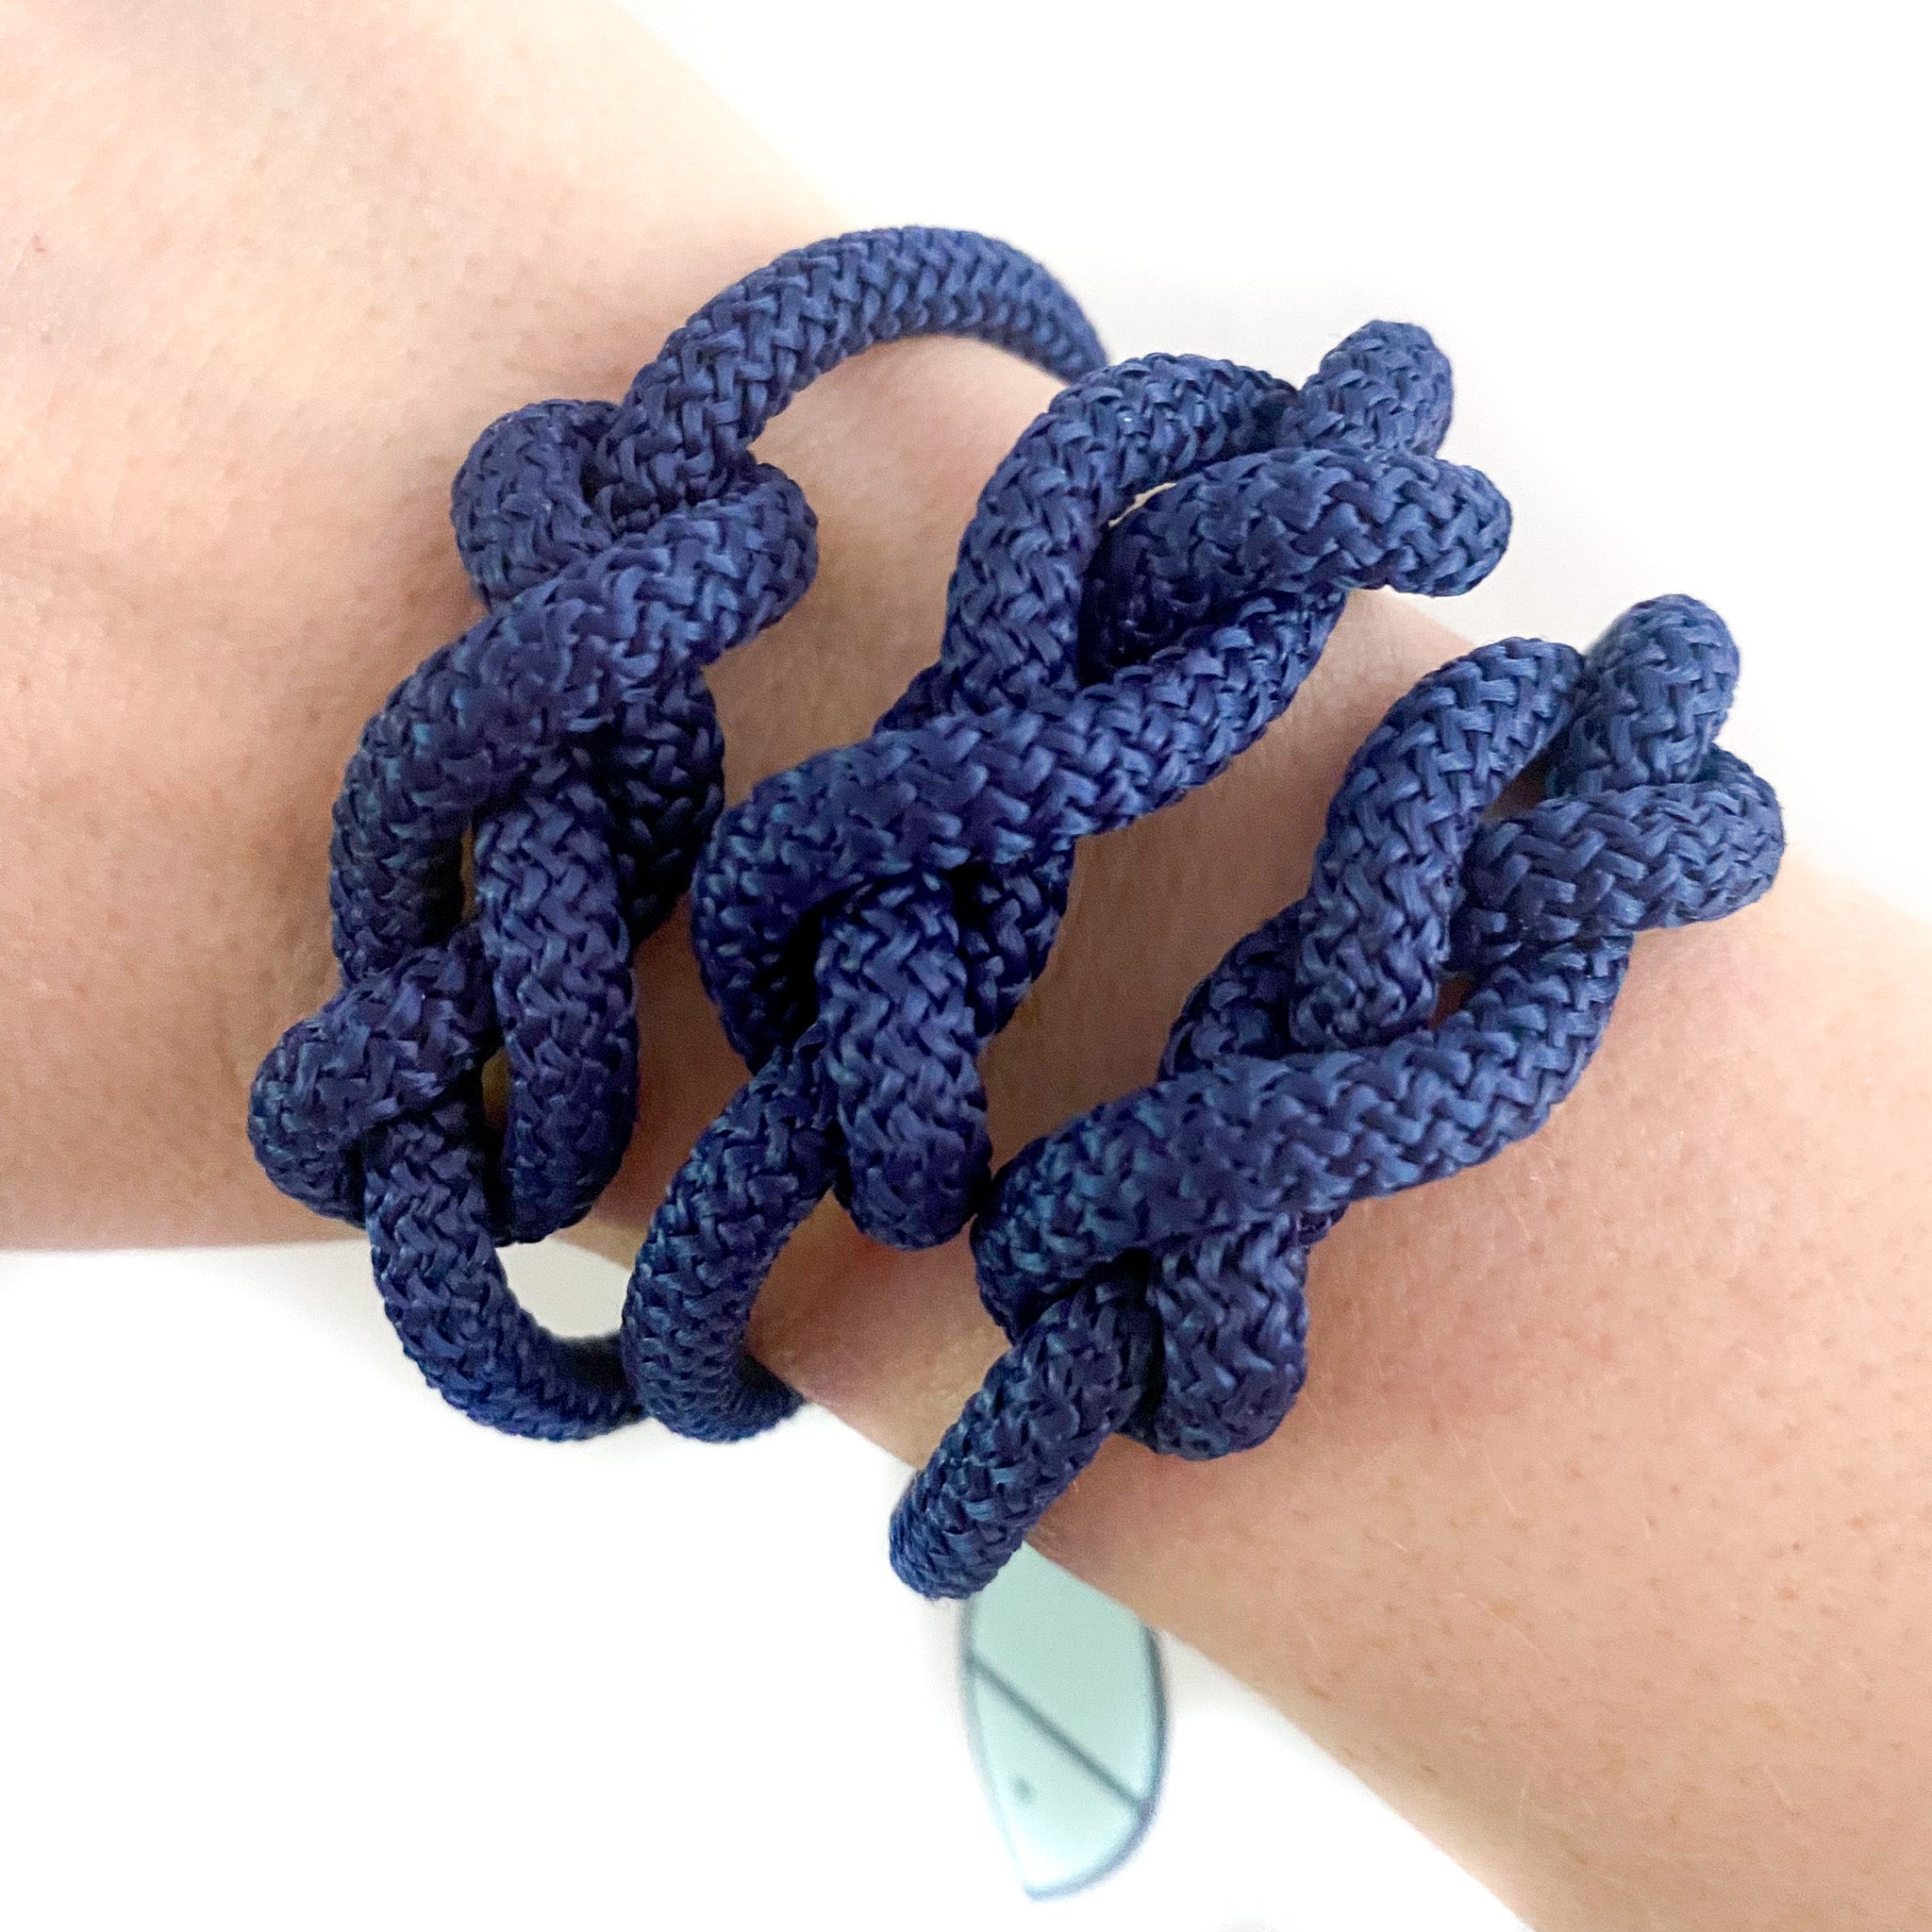 Knots and fiber bracelets: how to adjust the slip-knot rope bracelet